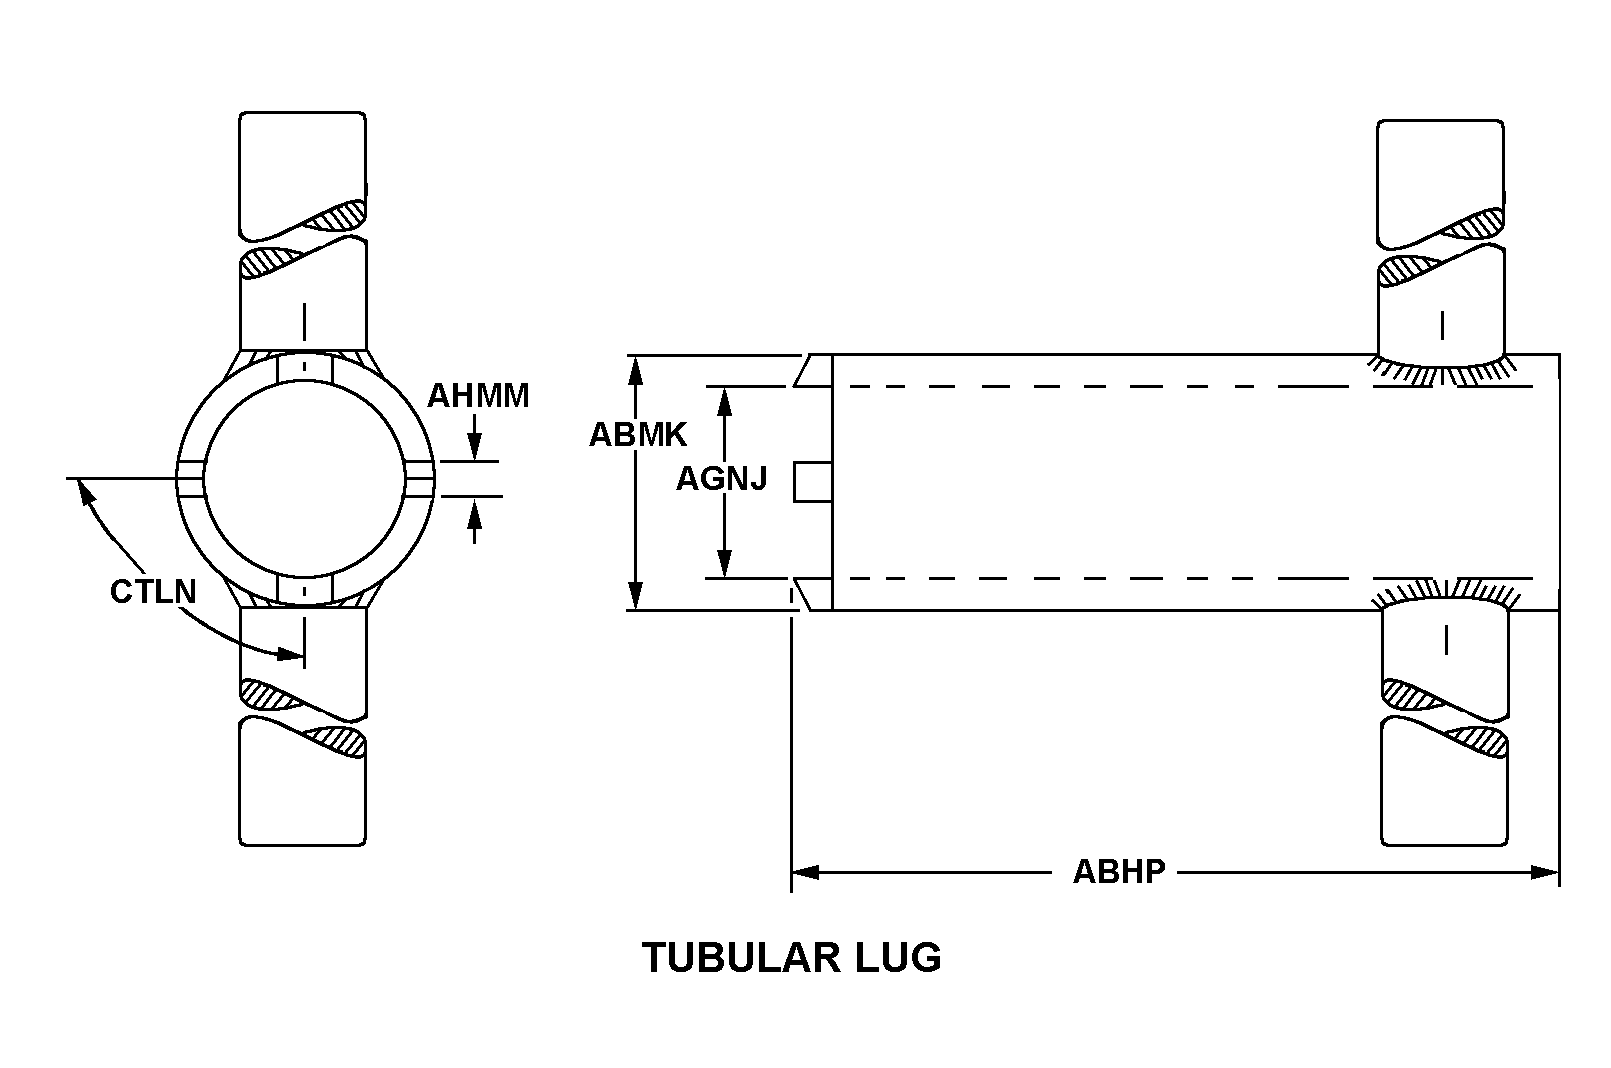 TUBULAR LUG style nsn 5120-00-718-8742